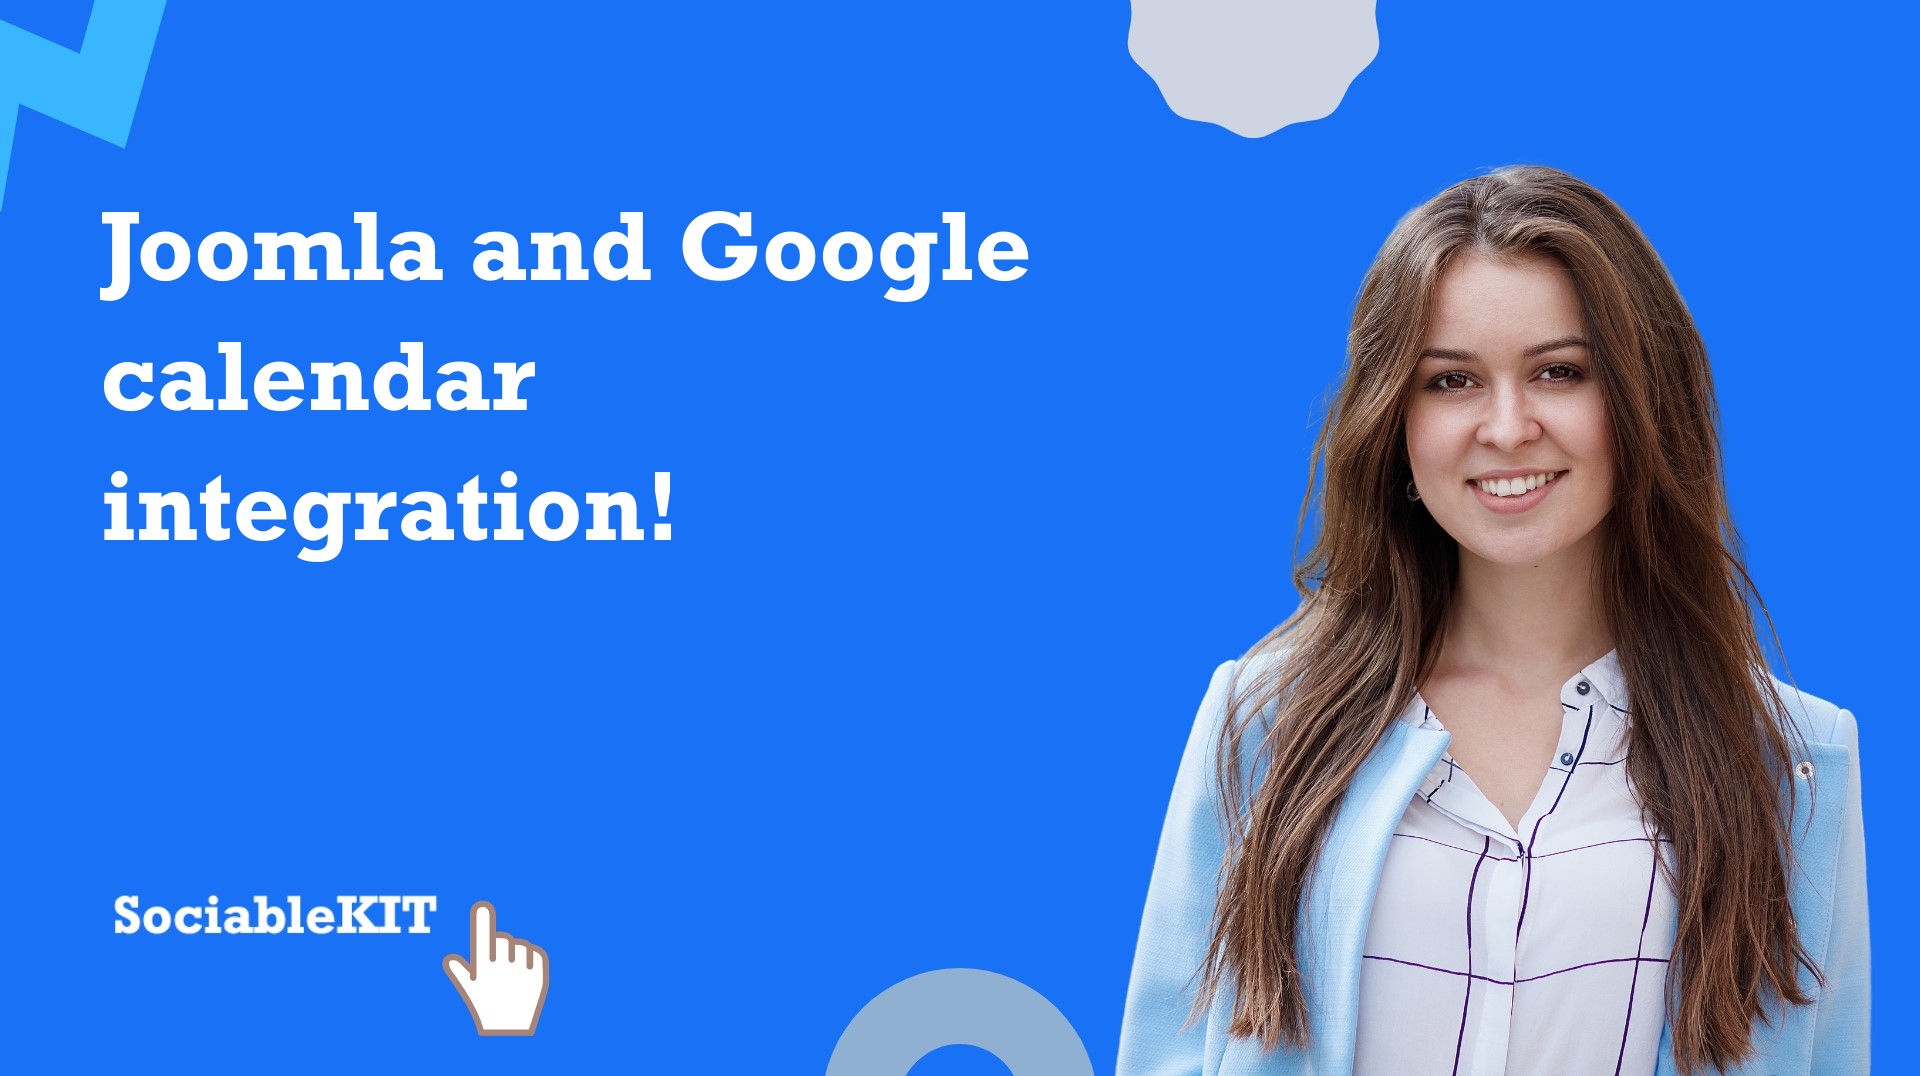 Joomla and Google calendar integration